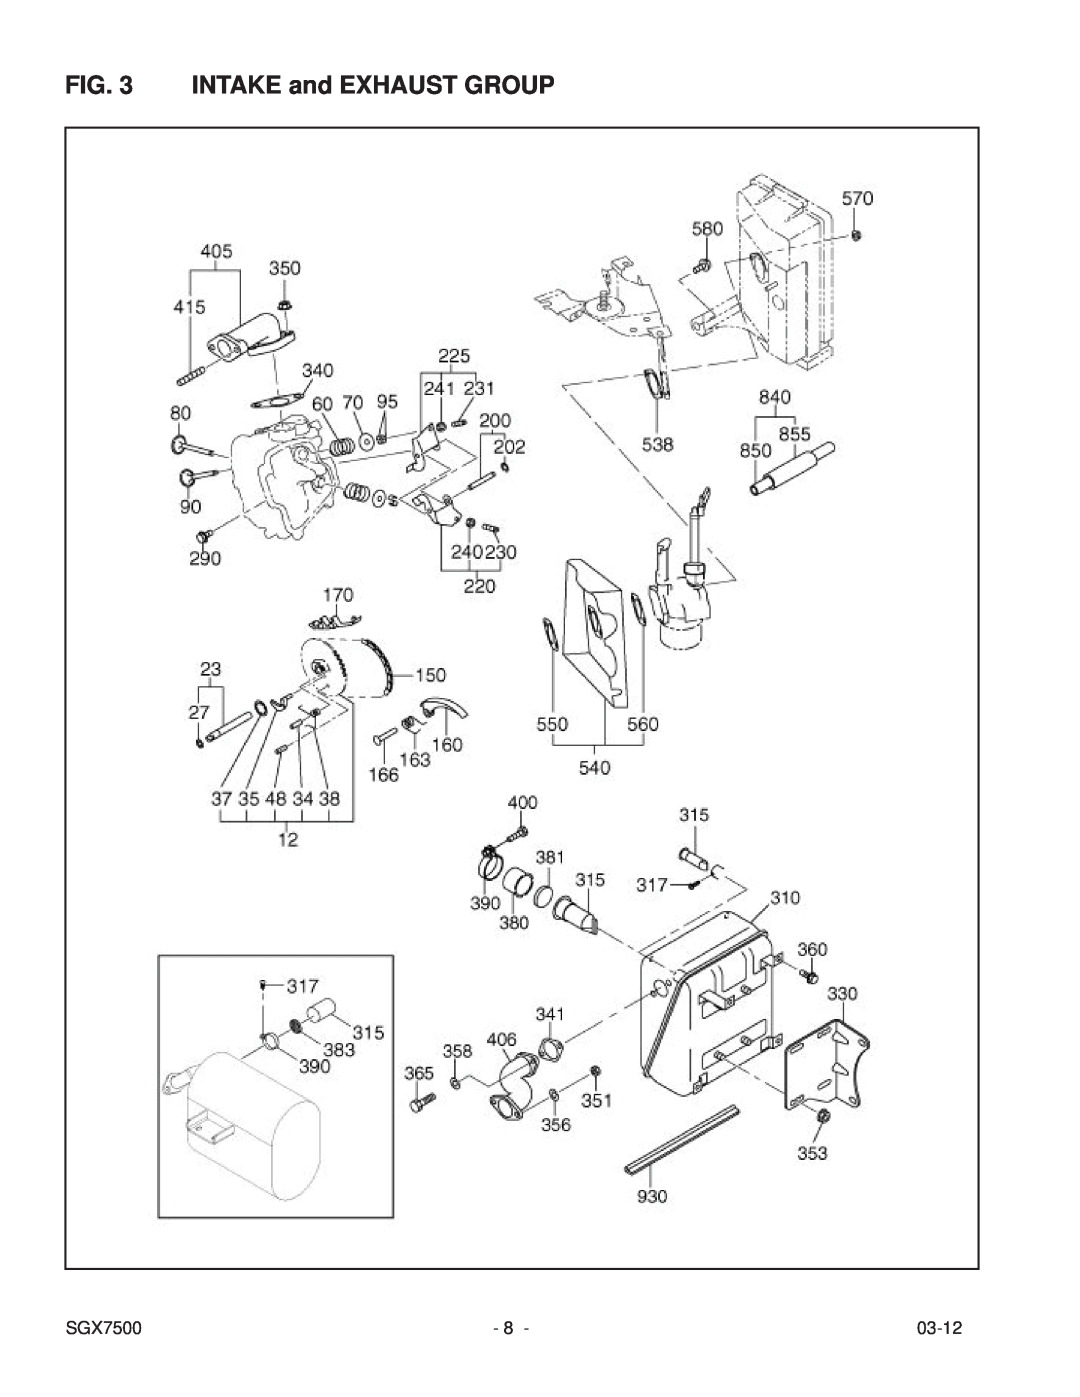 Subaru SGX7500 manual INTAKE and EXHAUST GROUP, 03-12 